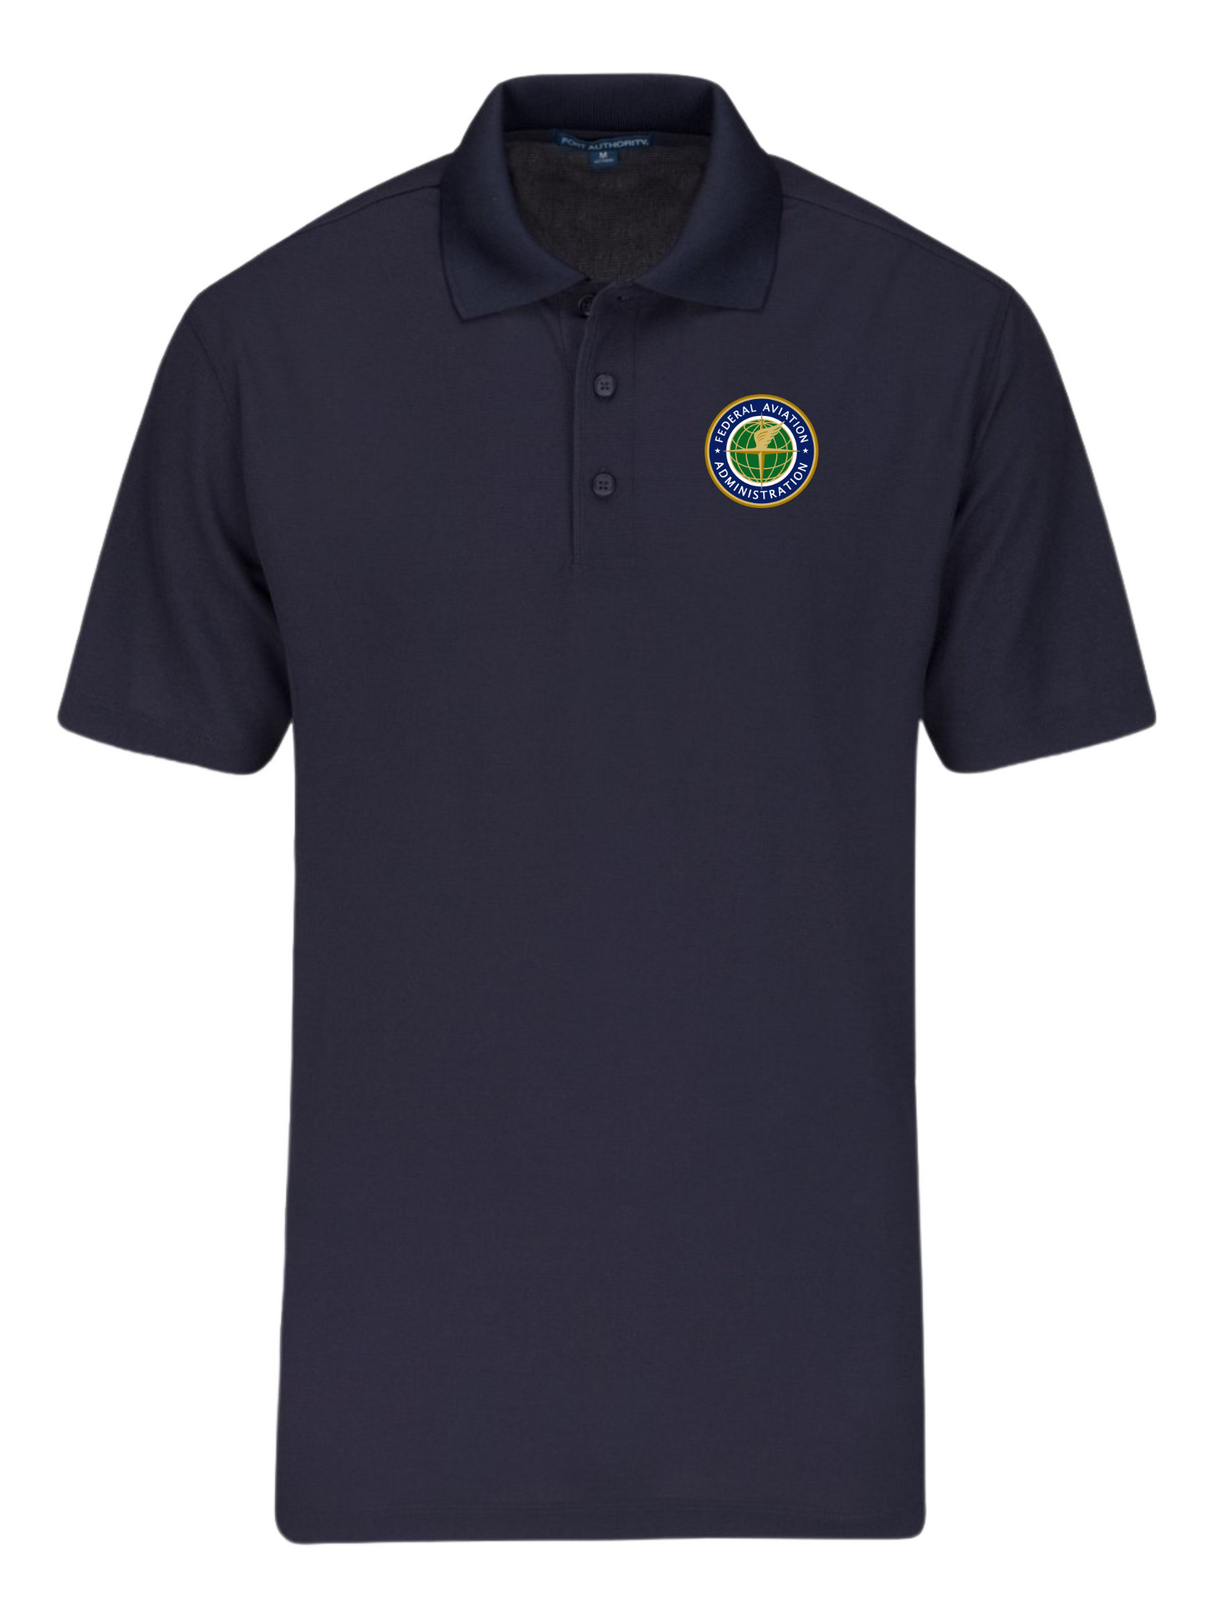 FAA Polo Shirt - Men's Short Sleeve - FEDS Apparel